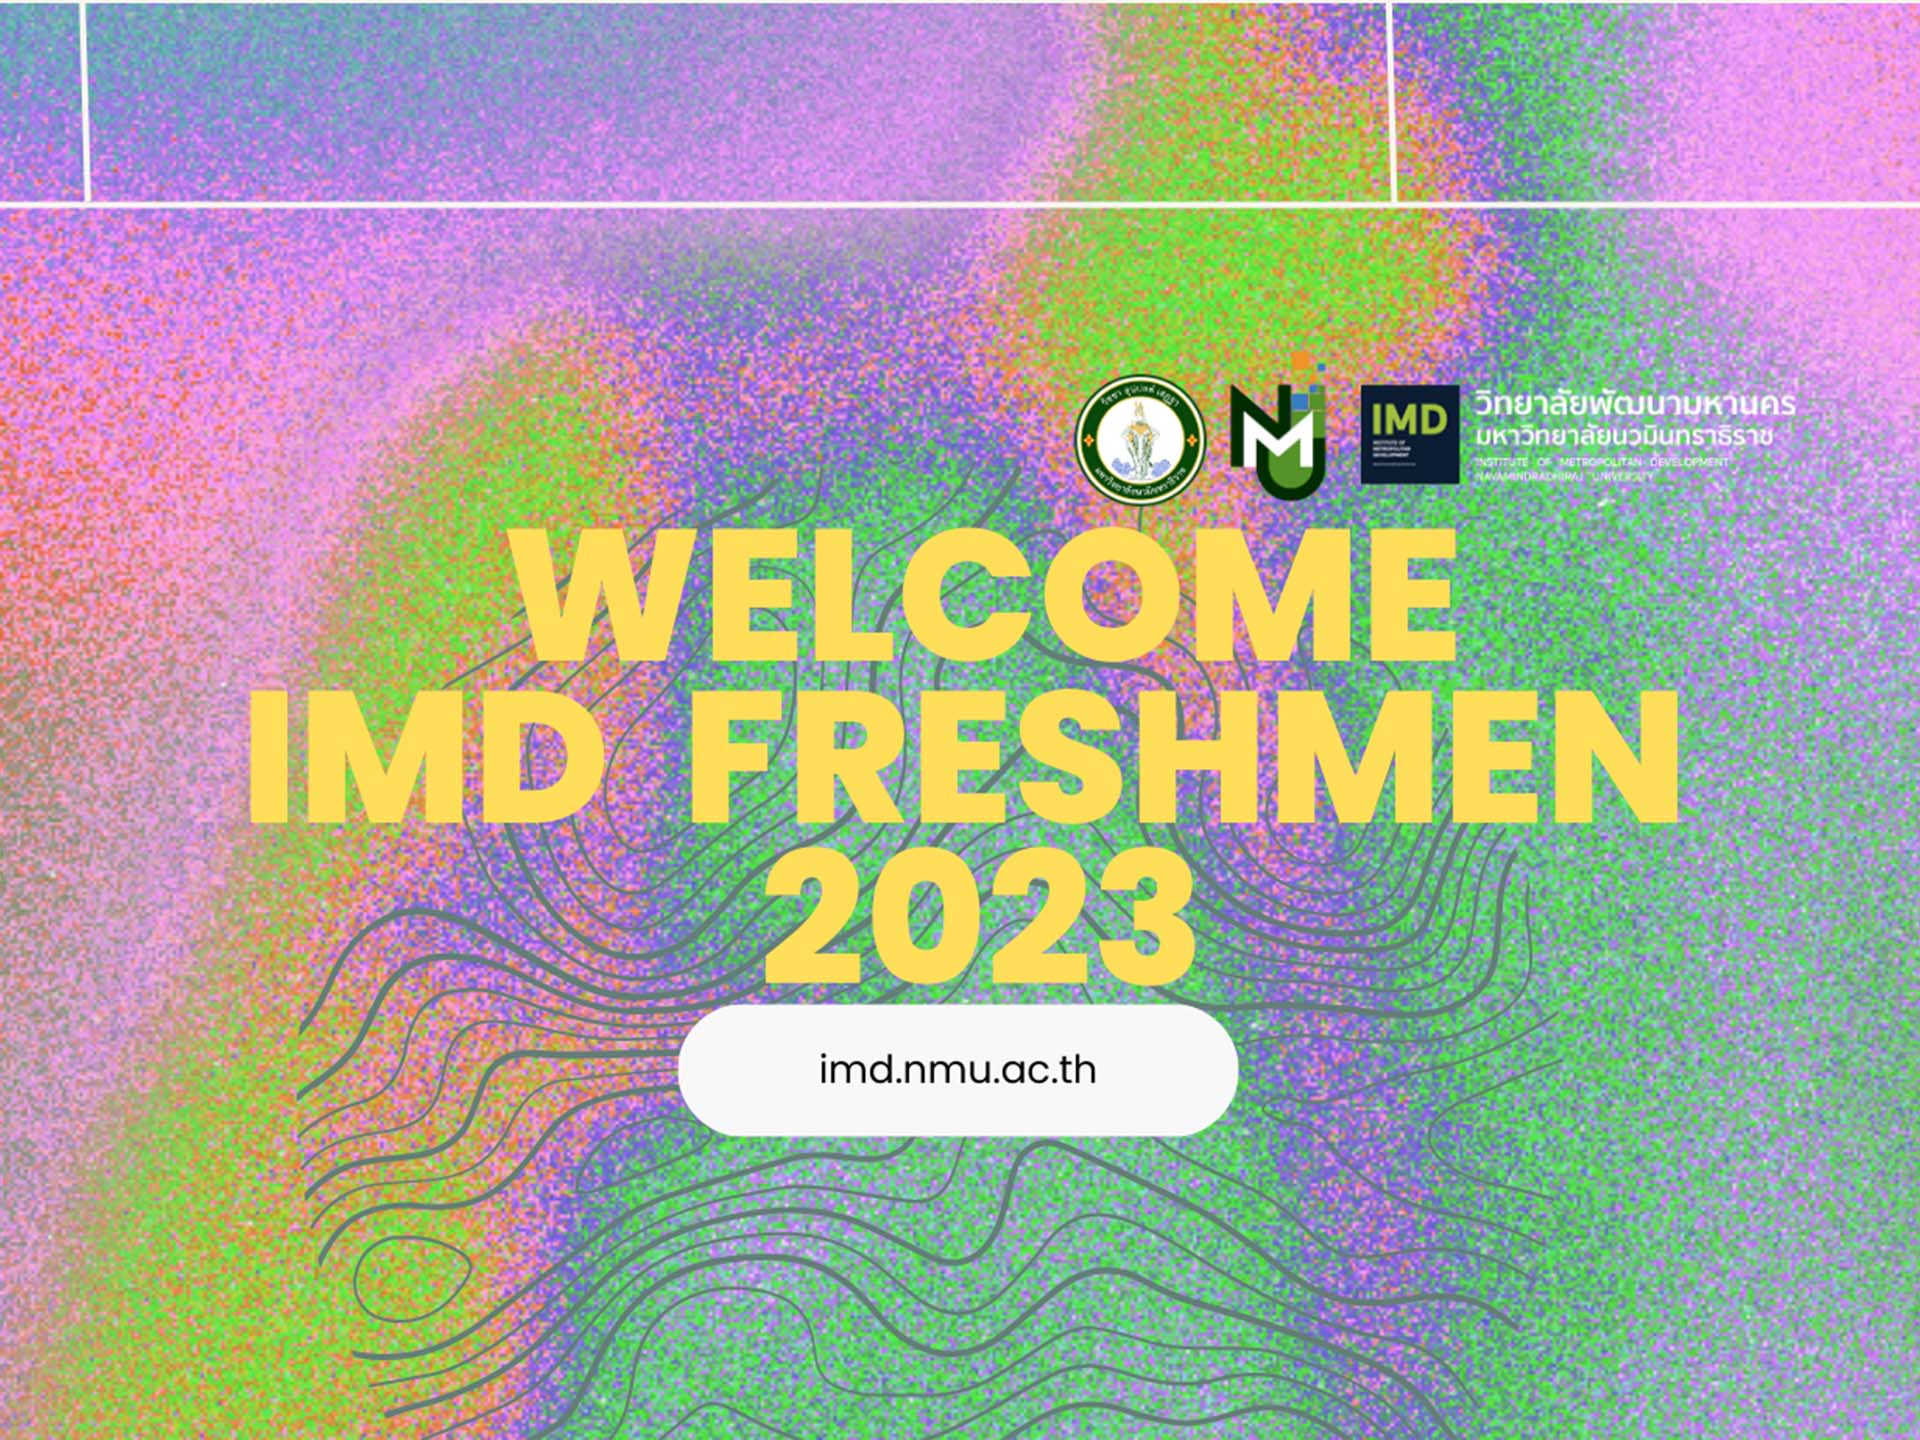 Welcome IMD FRESHMEN 2023